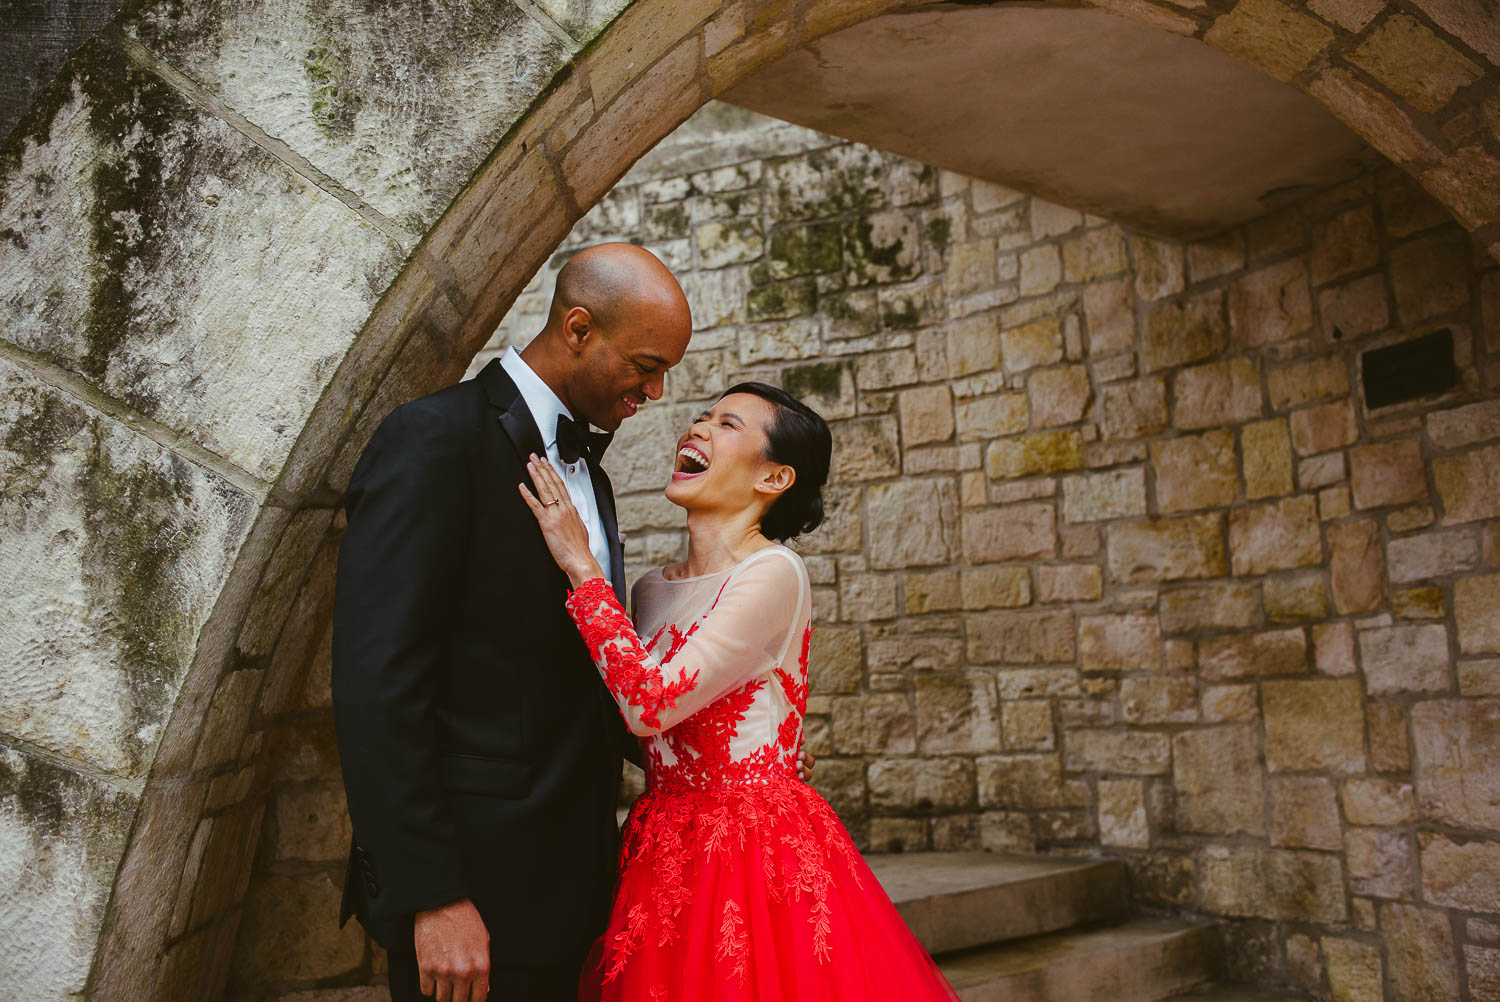 Couple share a candid moment of joy along San Antonio riverwalk near Hotel Havana -Leica photographer-Philip Thomas Photography